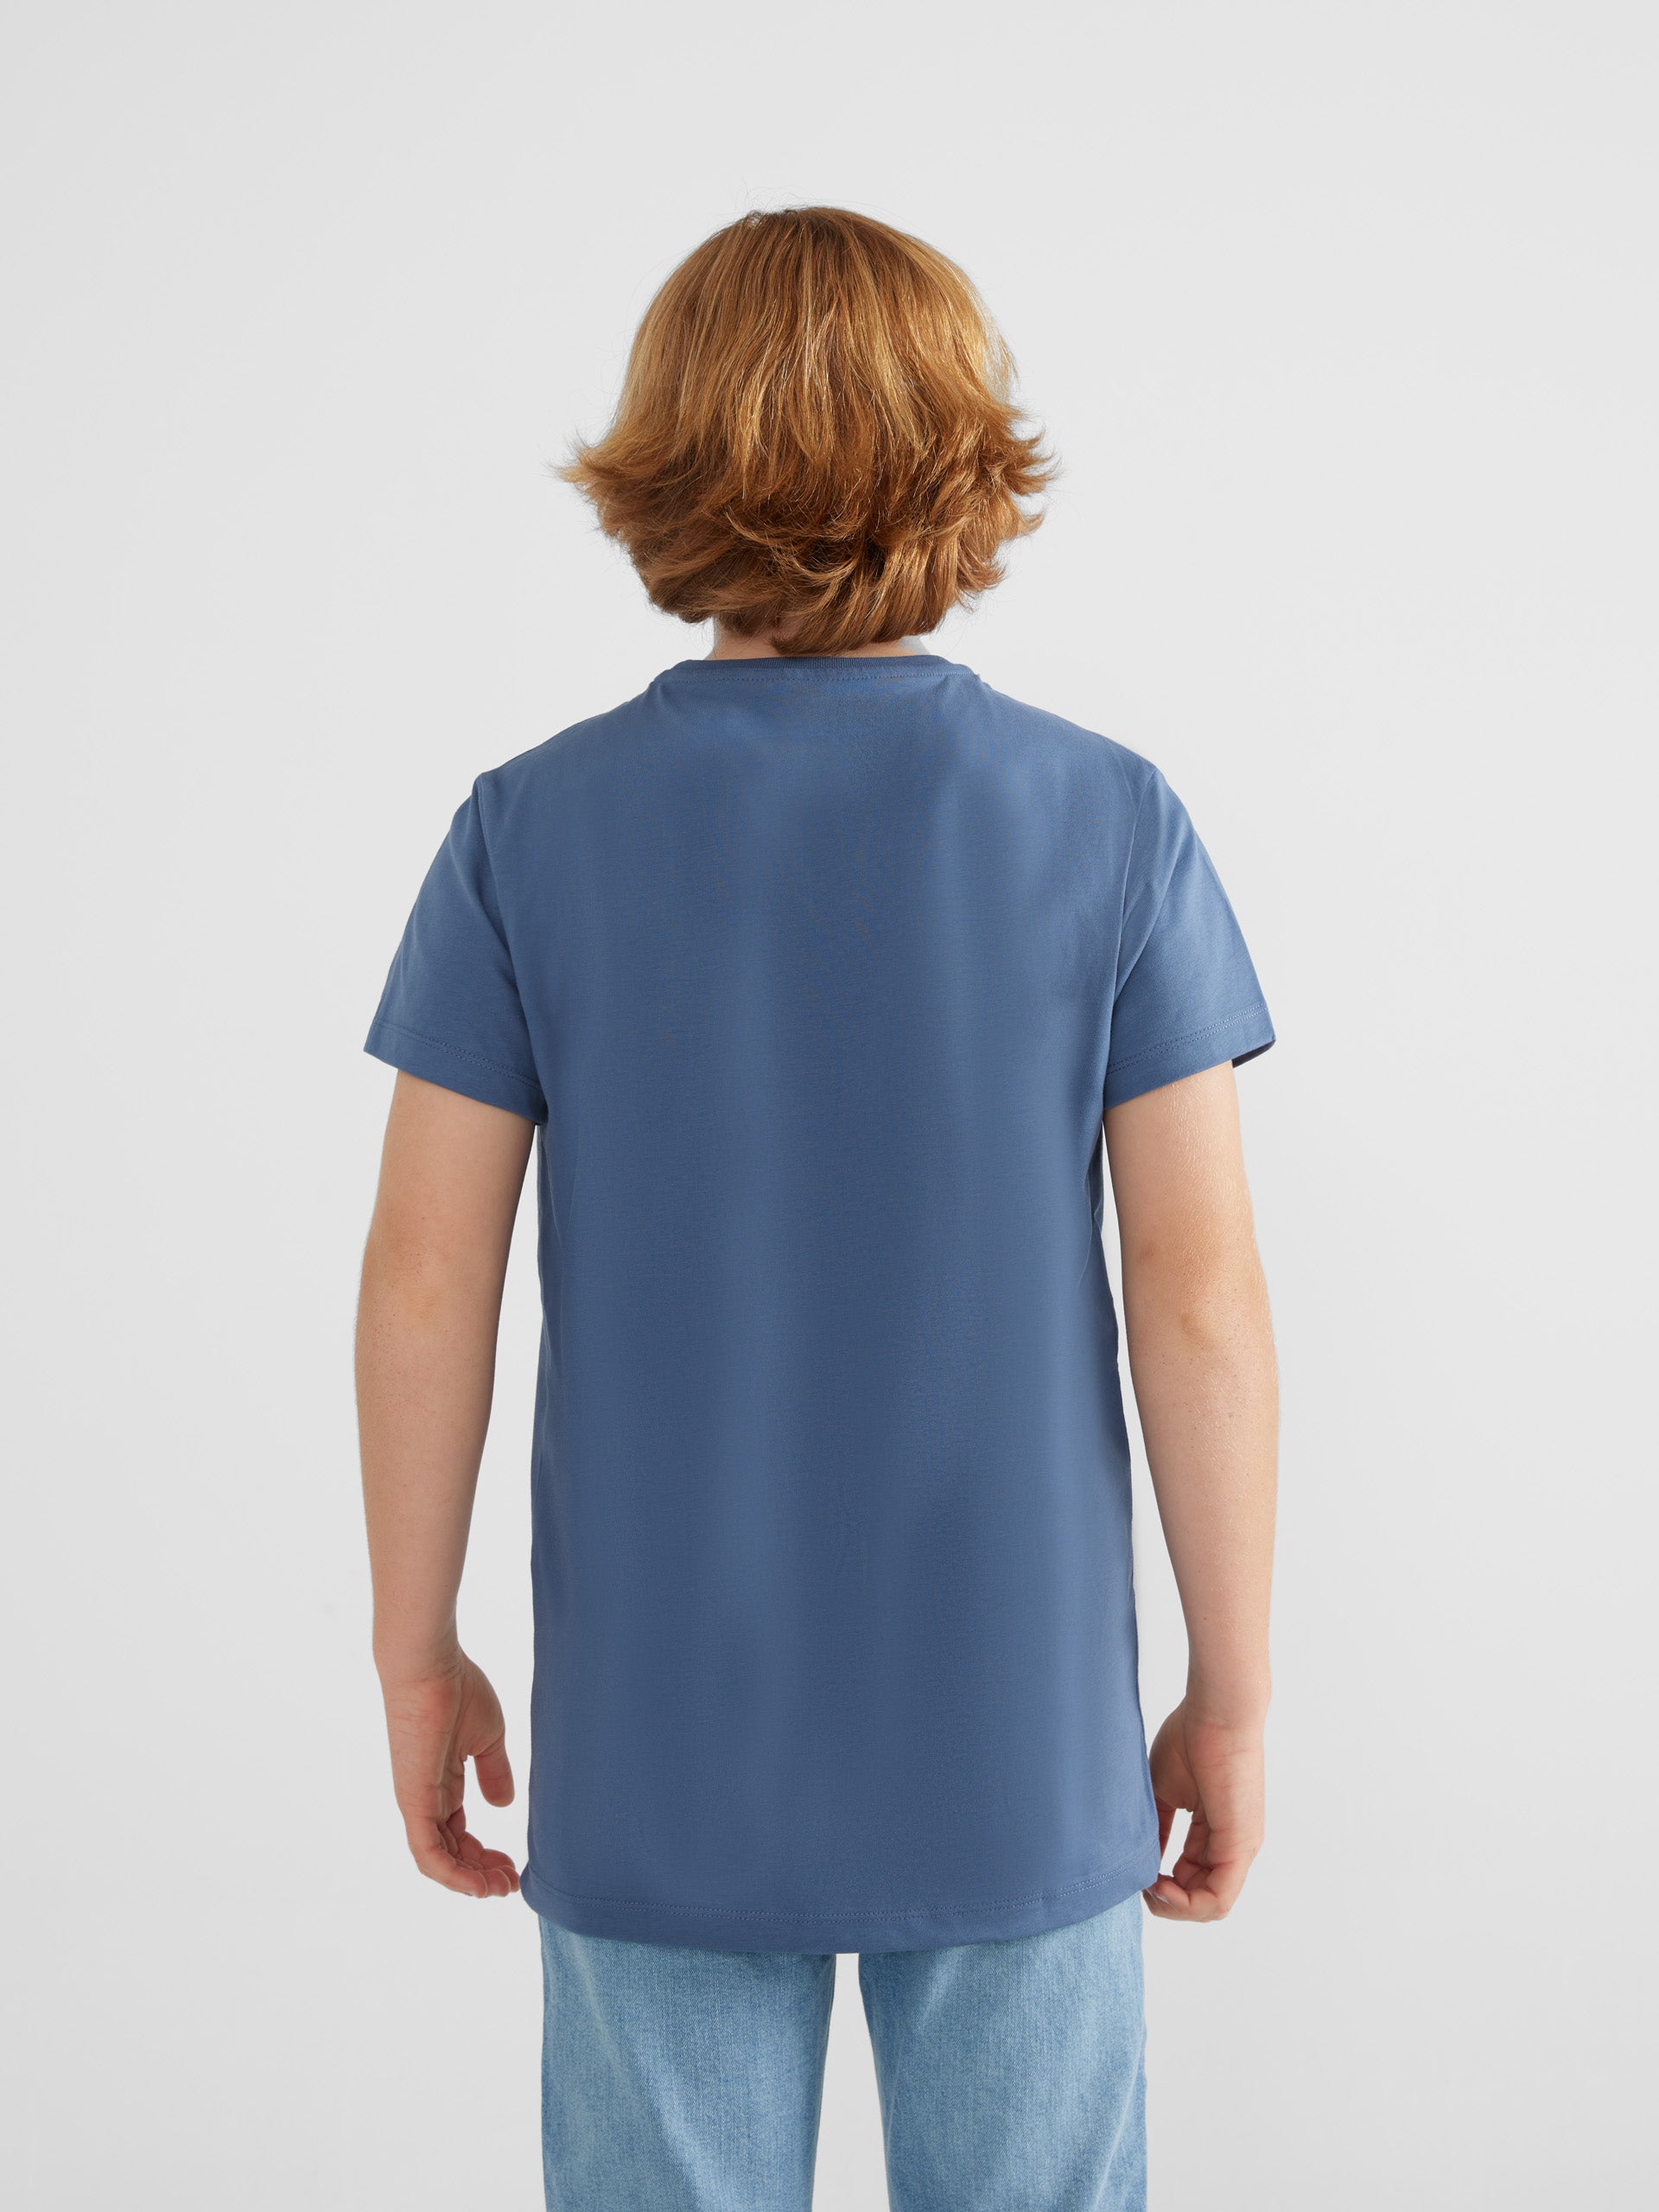 Camiseta kids corporativa pixel azul